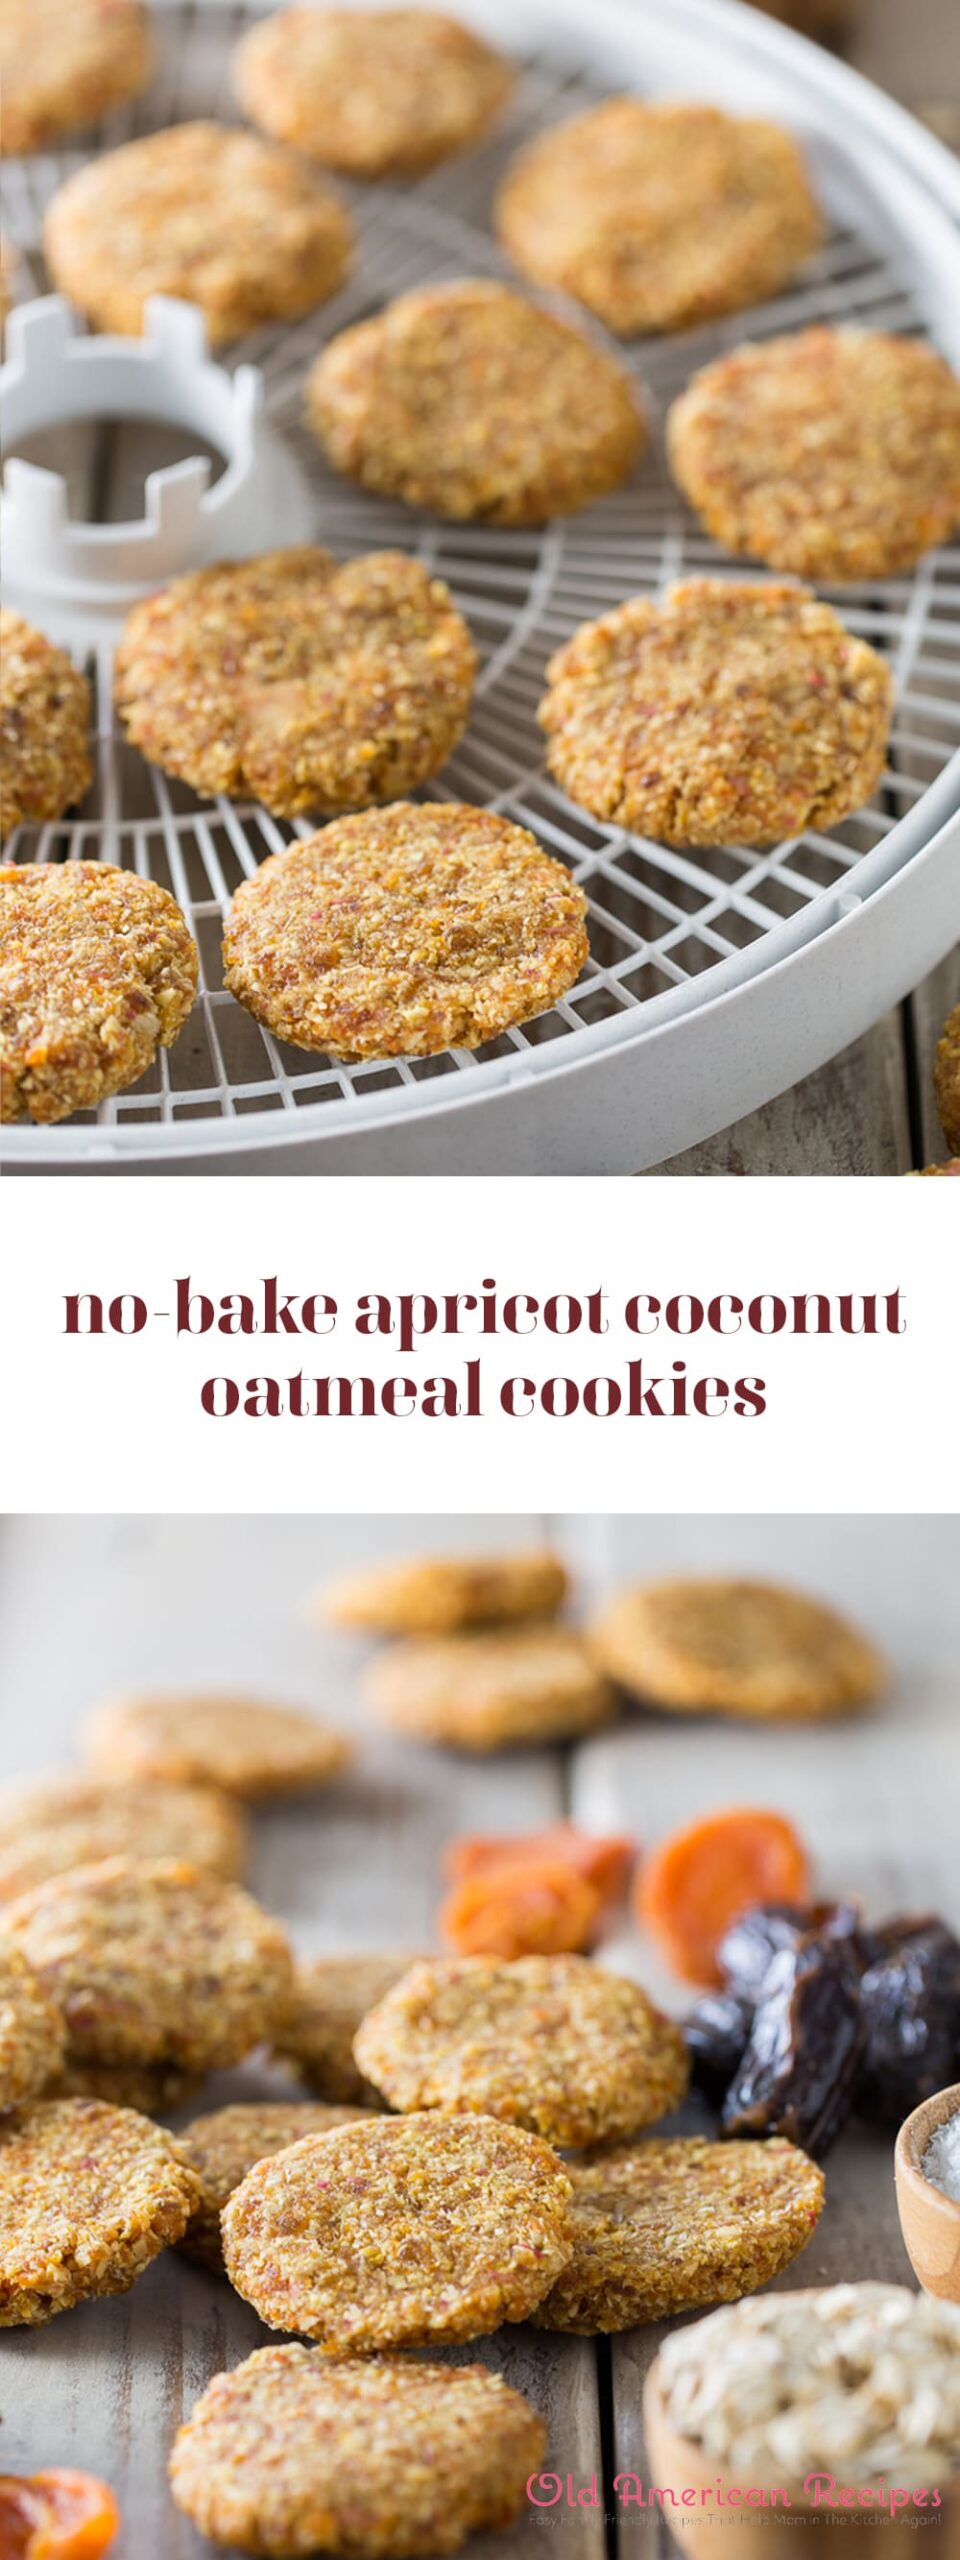 No-bake apricot coconut oatmeal cookies